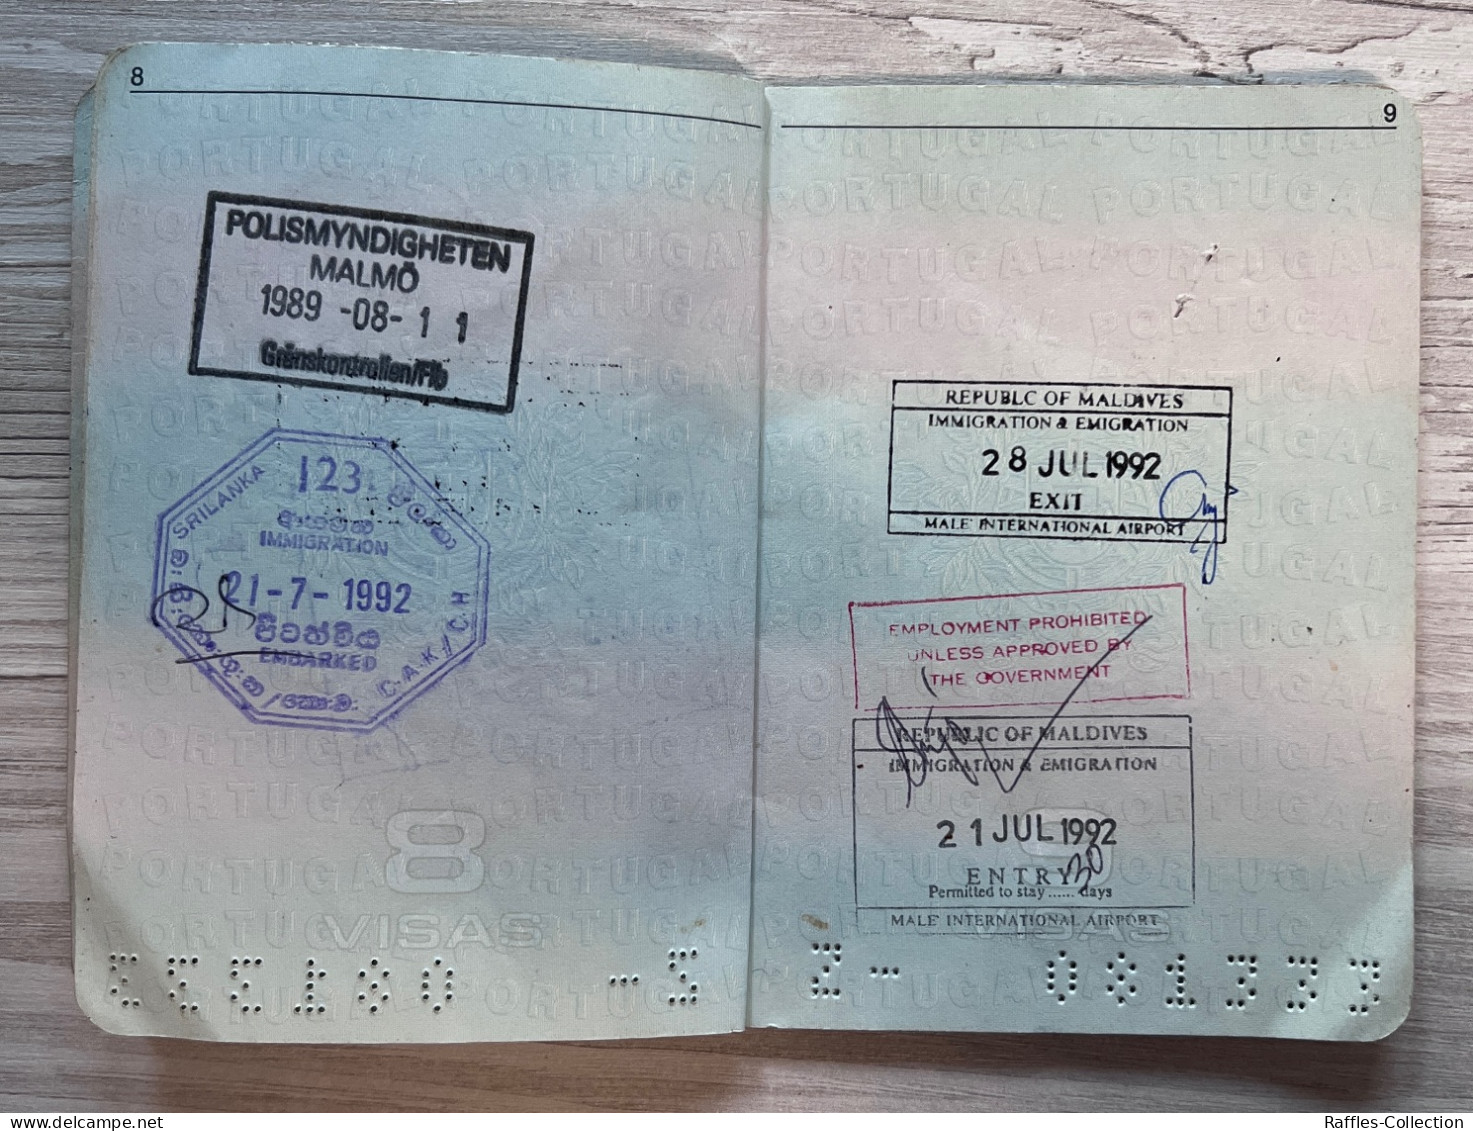 Portugal passport with India, Sri Lanka, Maldives visas / passeport reisepass pasaporte passaporto